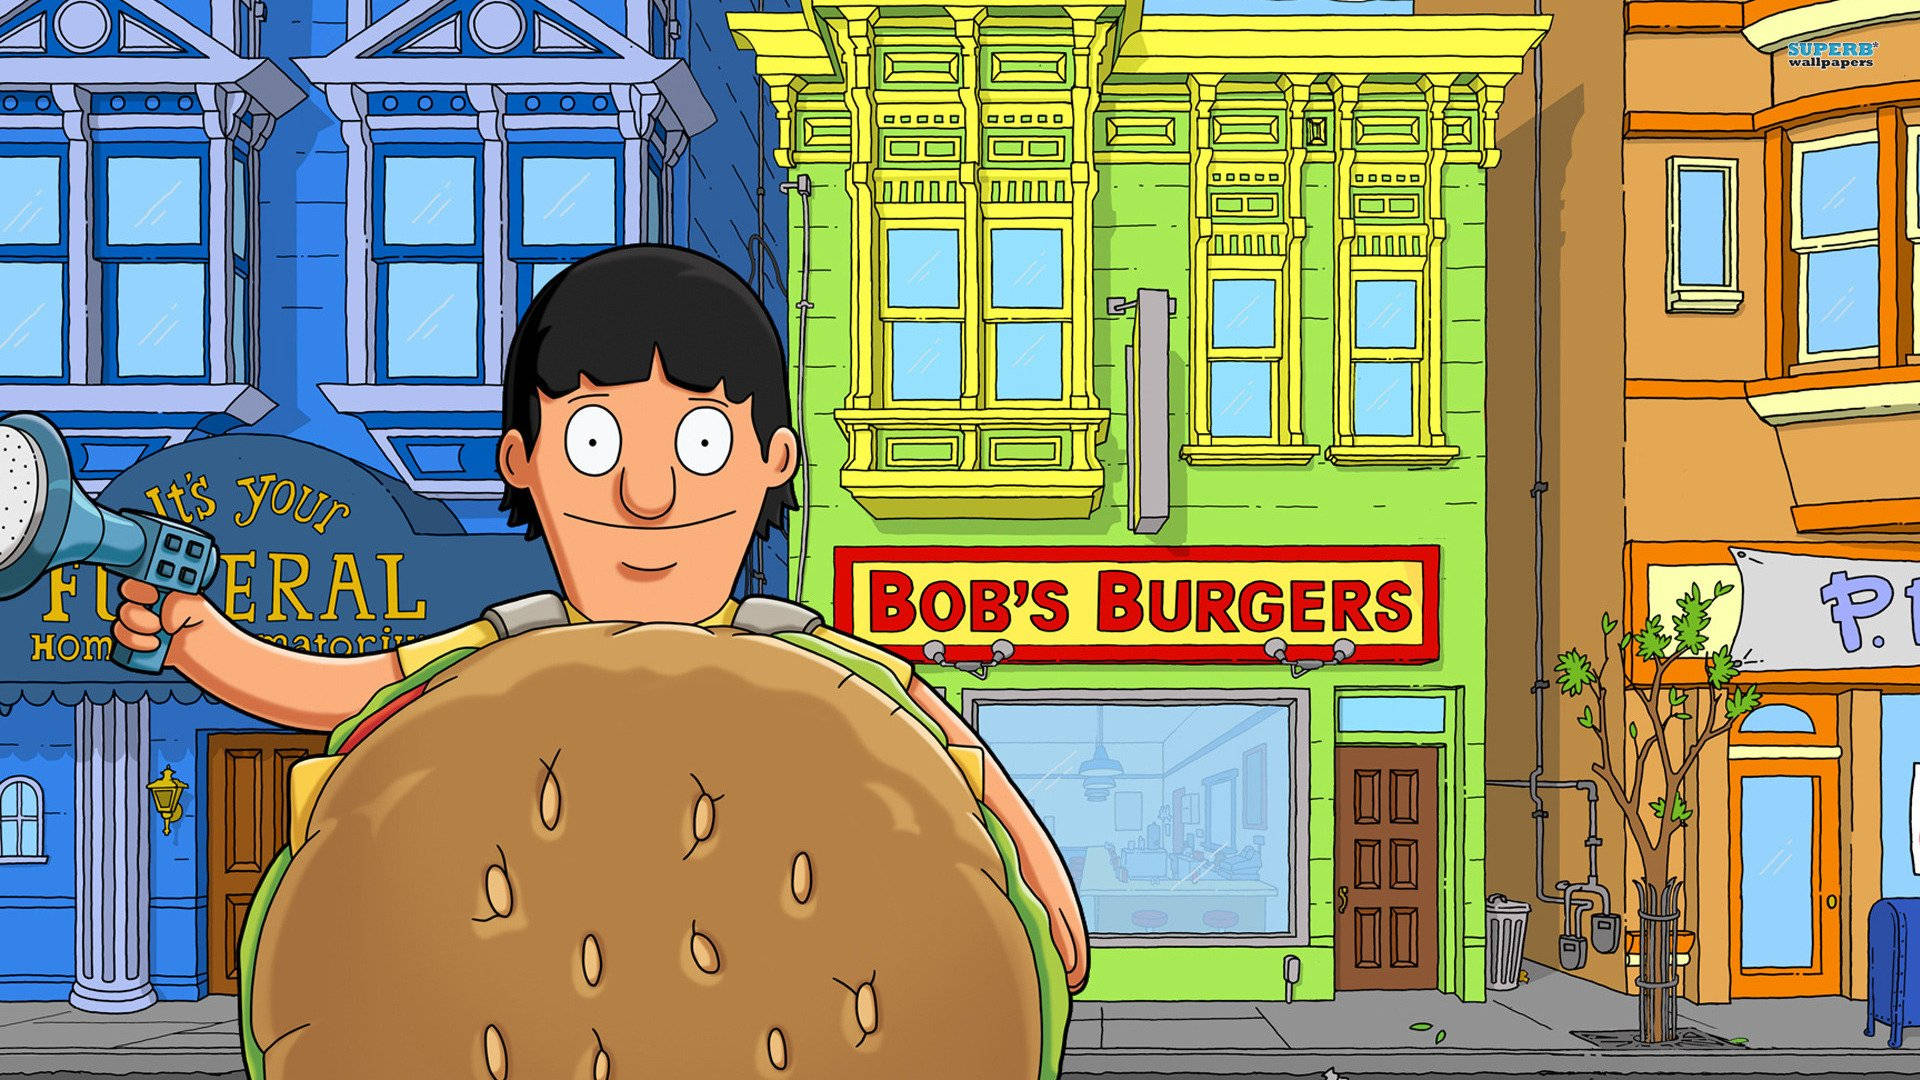 Bobs burgers nighttime iphone wallpaper  Bobs burgers wallpaper Bobs  burgers Bobs burgers funny